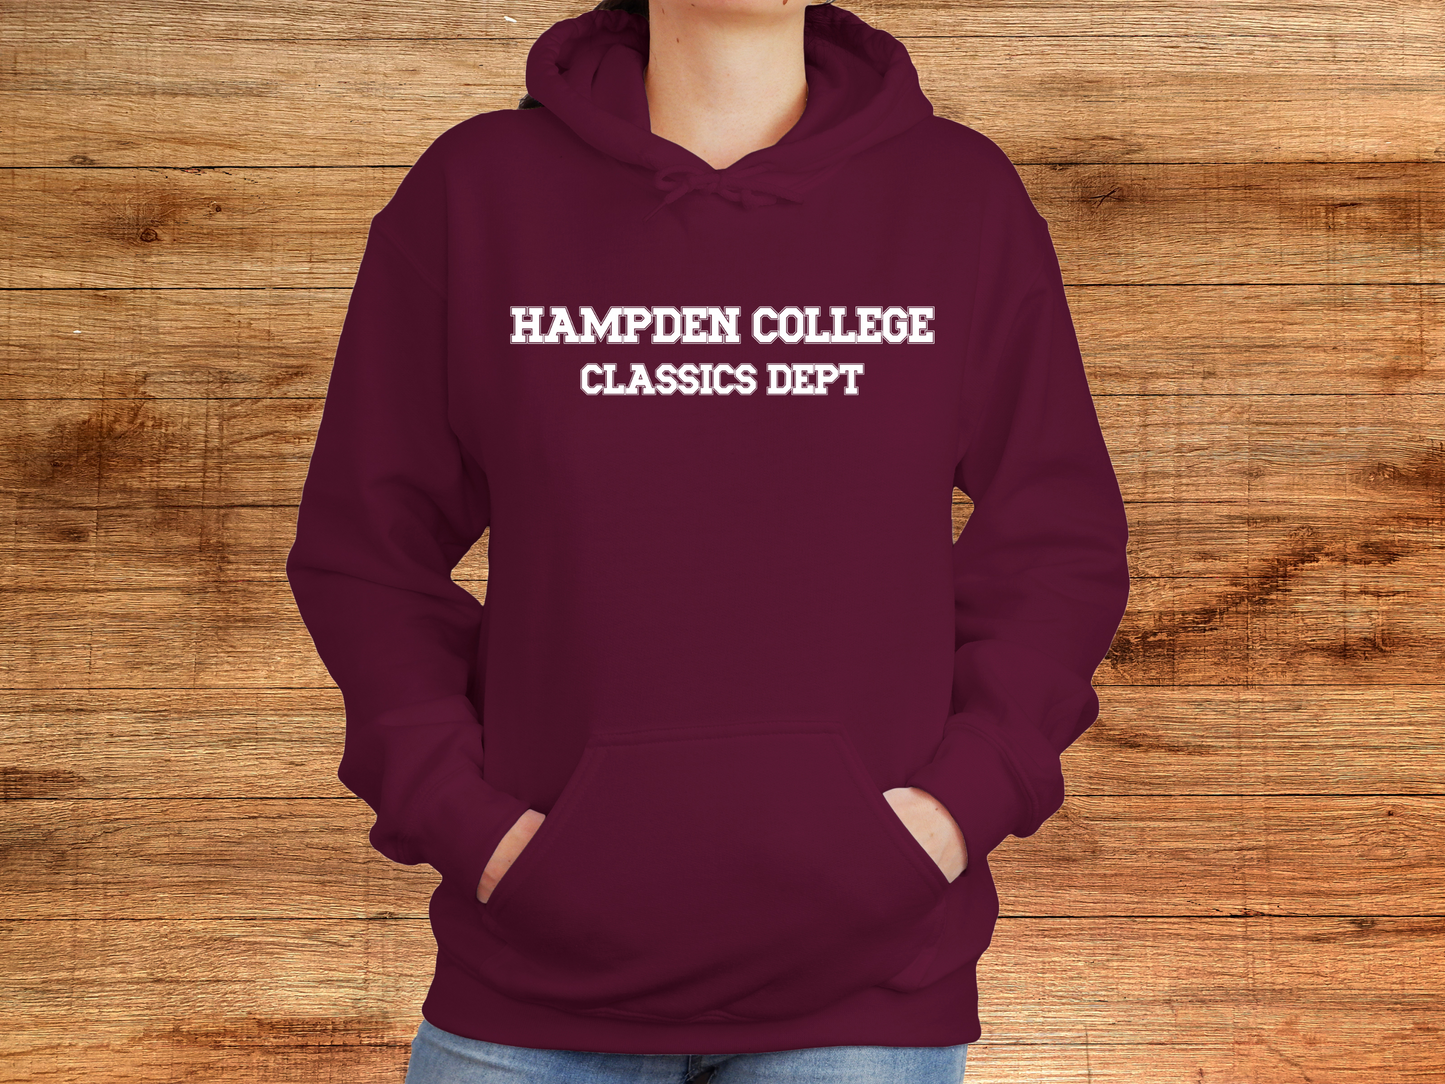 Hampden College Classics Department Hoodie, The Secret History, Dark Academia, Bookish Gifts